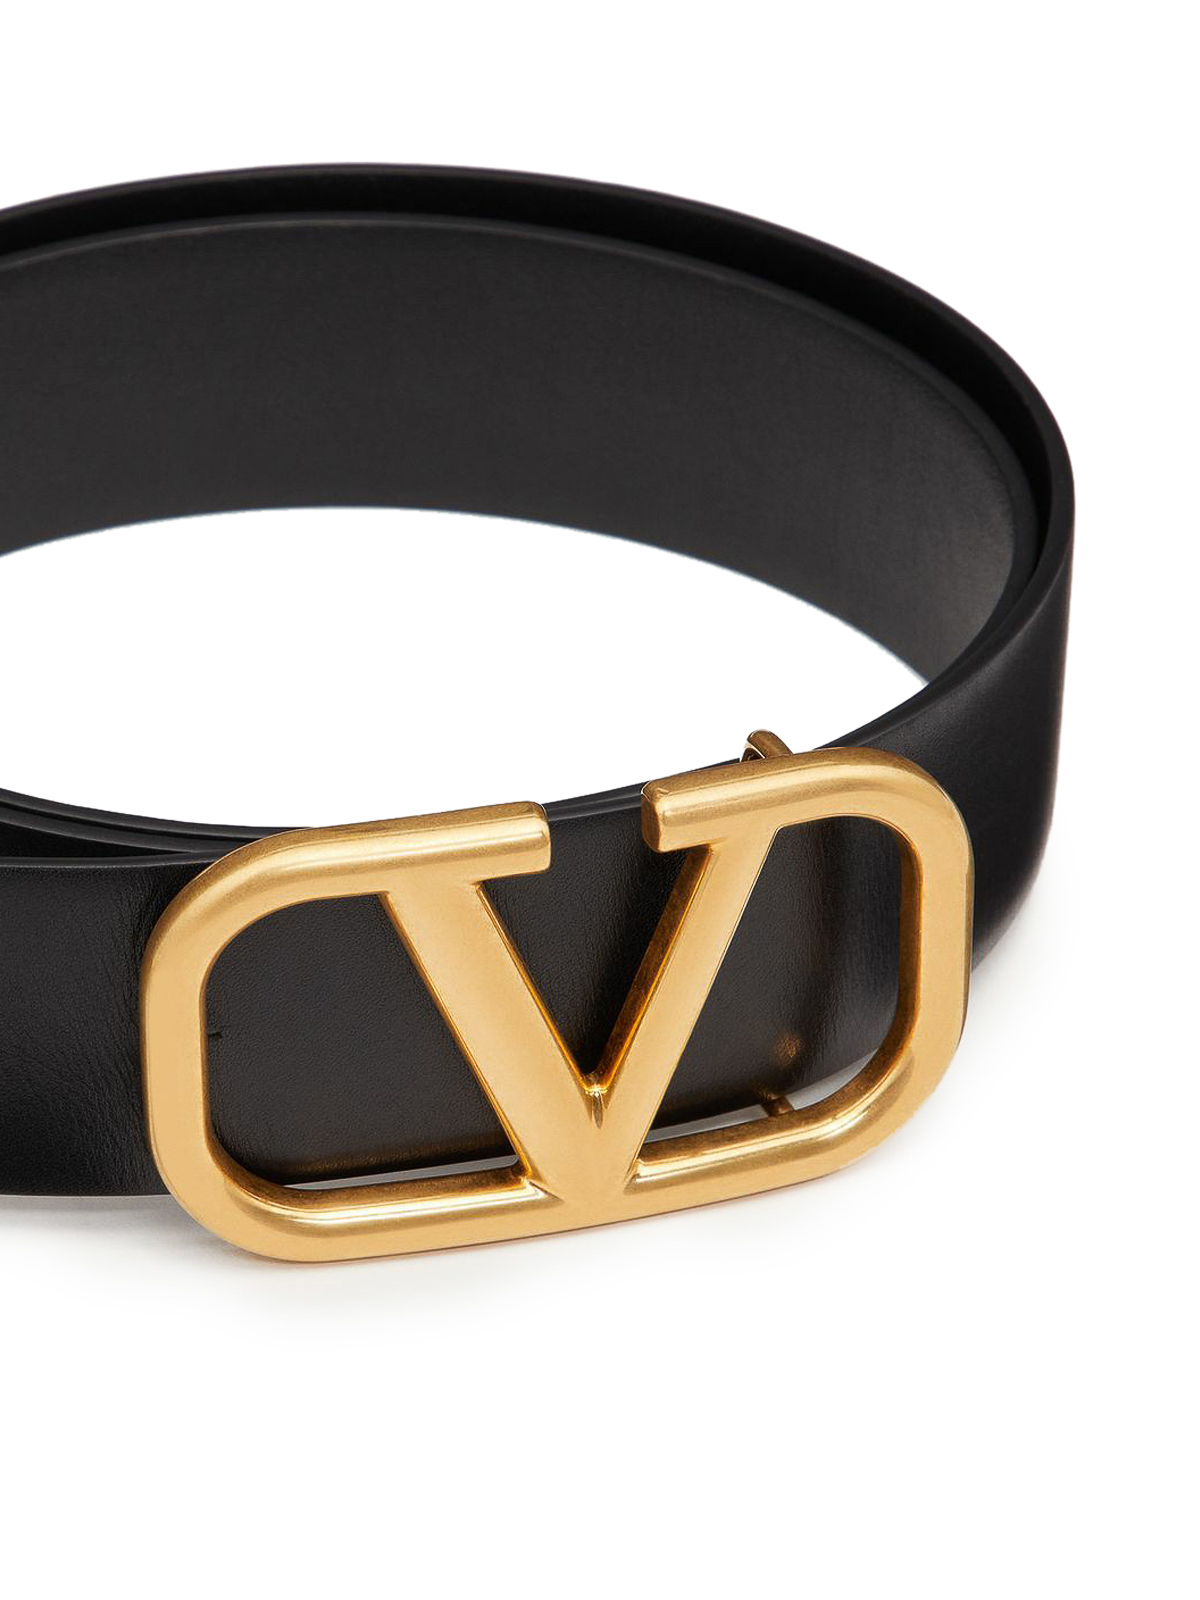 VALENTINO - Valentino Garavani 4cm Logo-Detailed Leather Belt - Black  Valentino Garavani